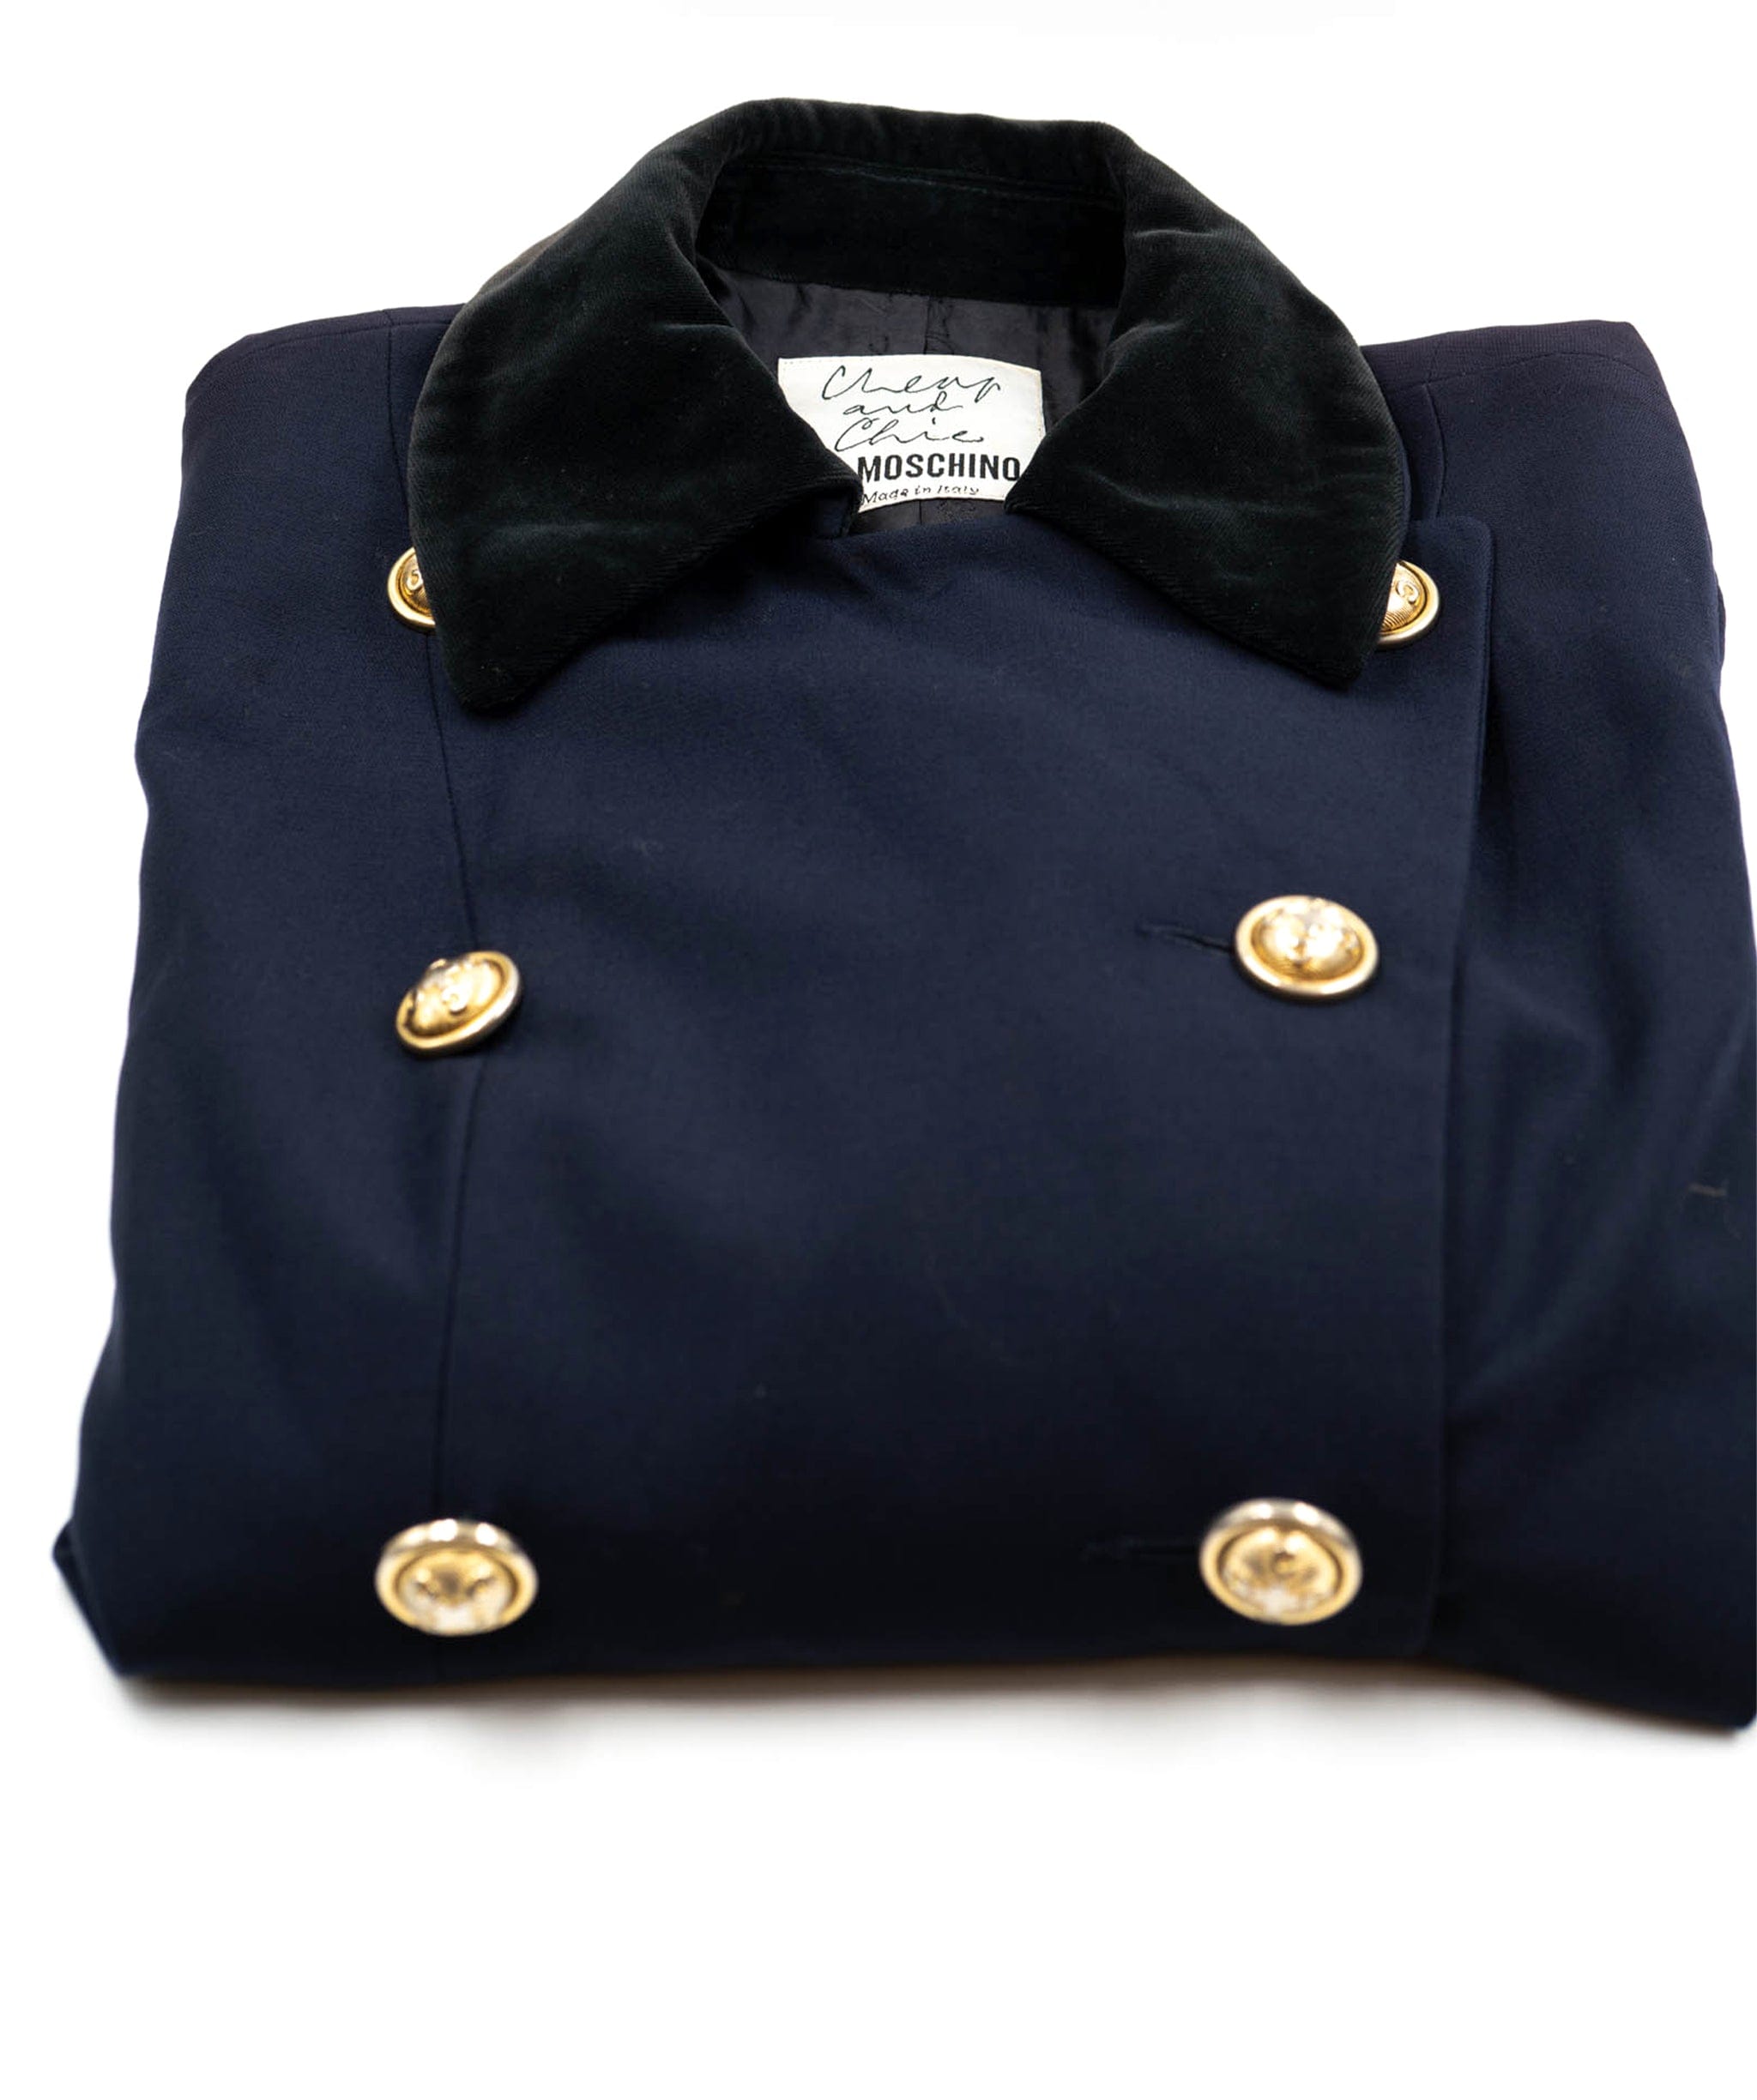 Moschino Moschino Cheap and Chic navy blazer, GHW AEL1088